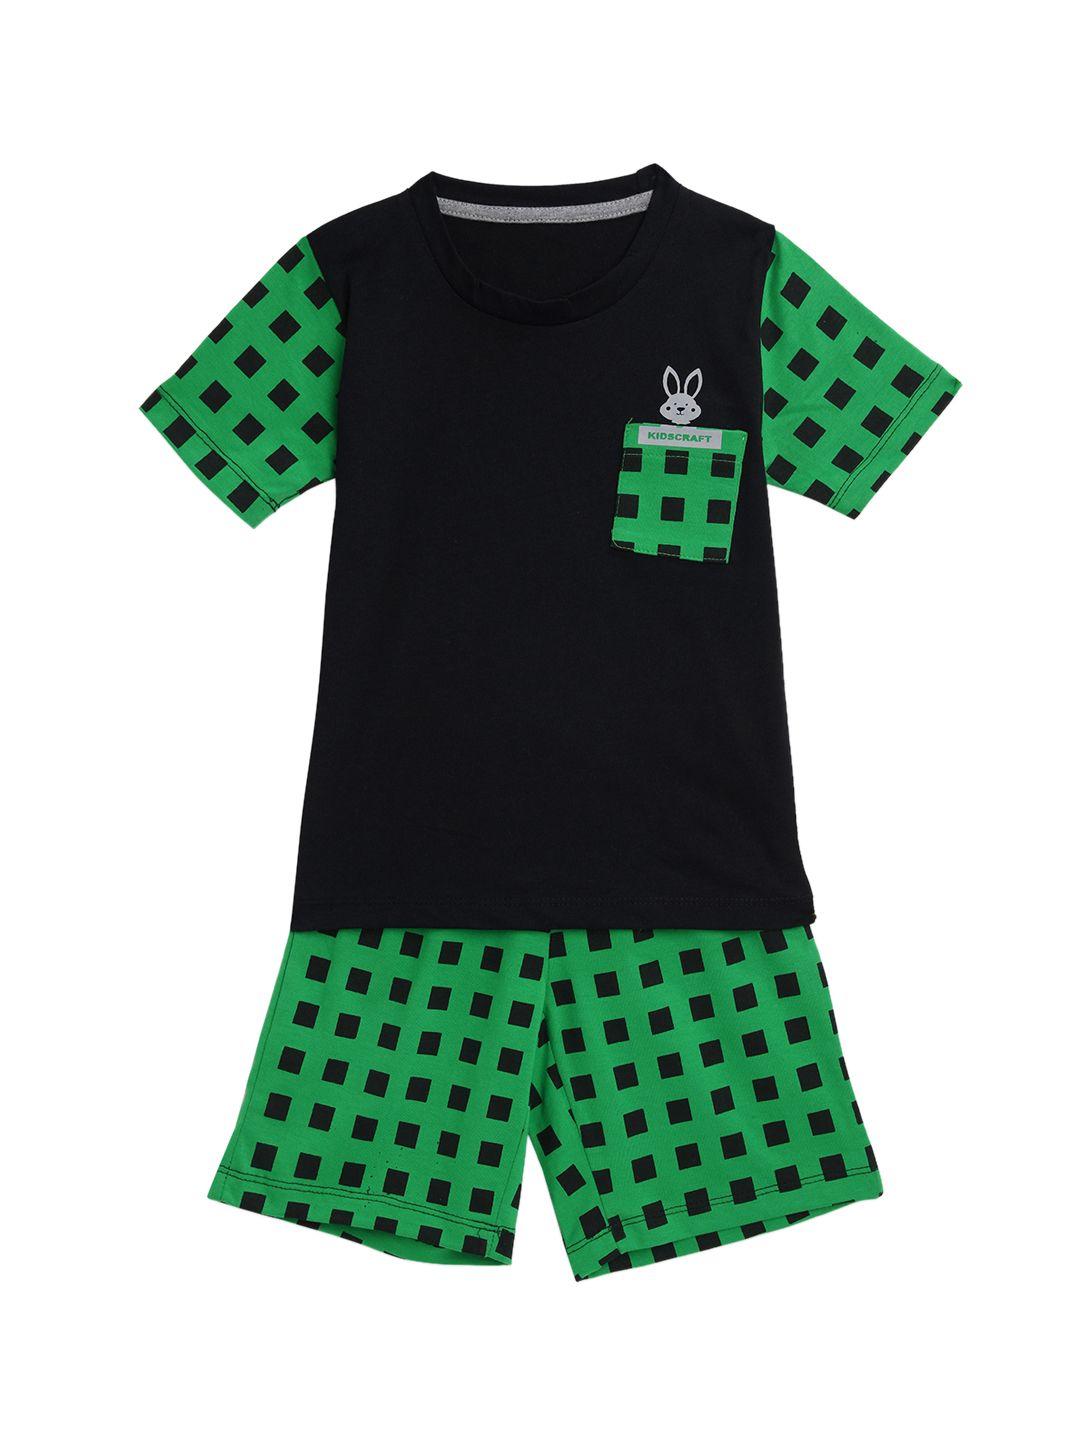 kidscraft boys black & green t-shirt with shorts